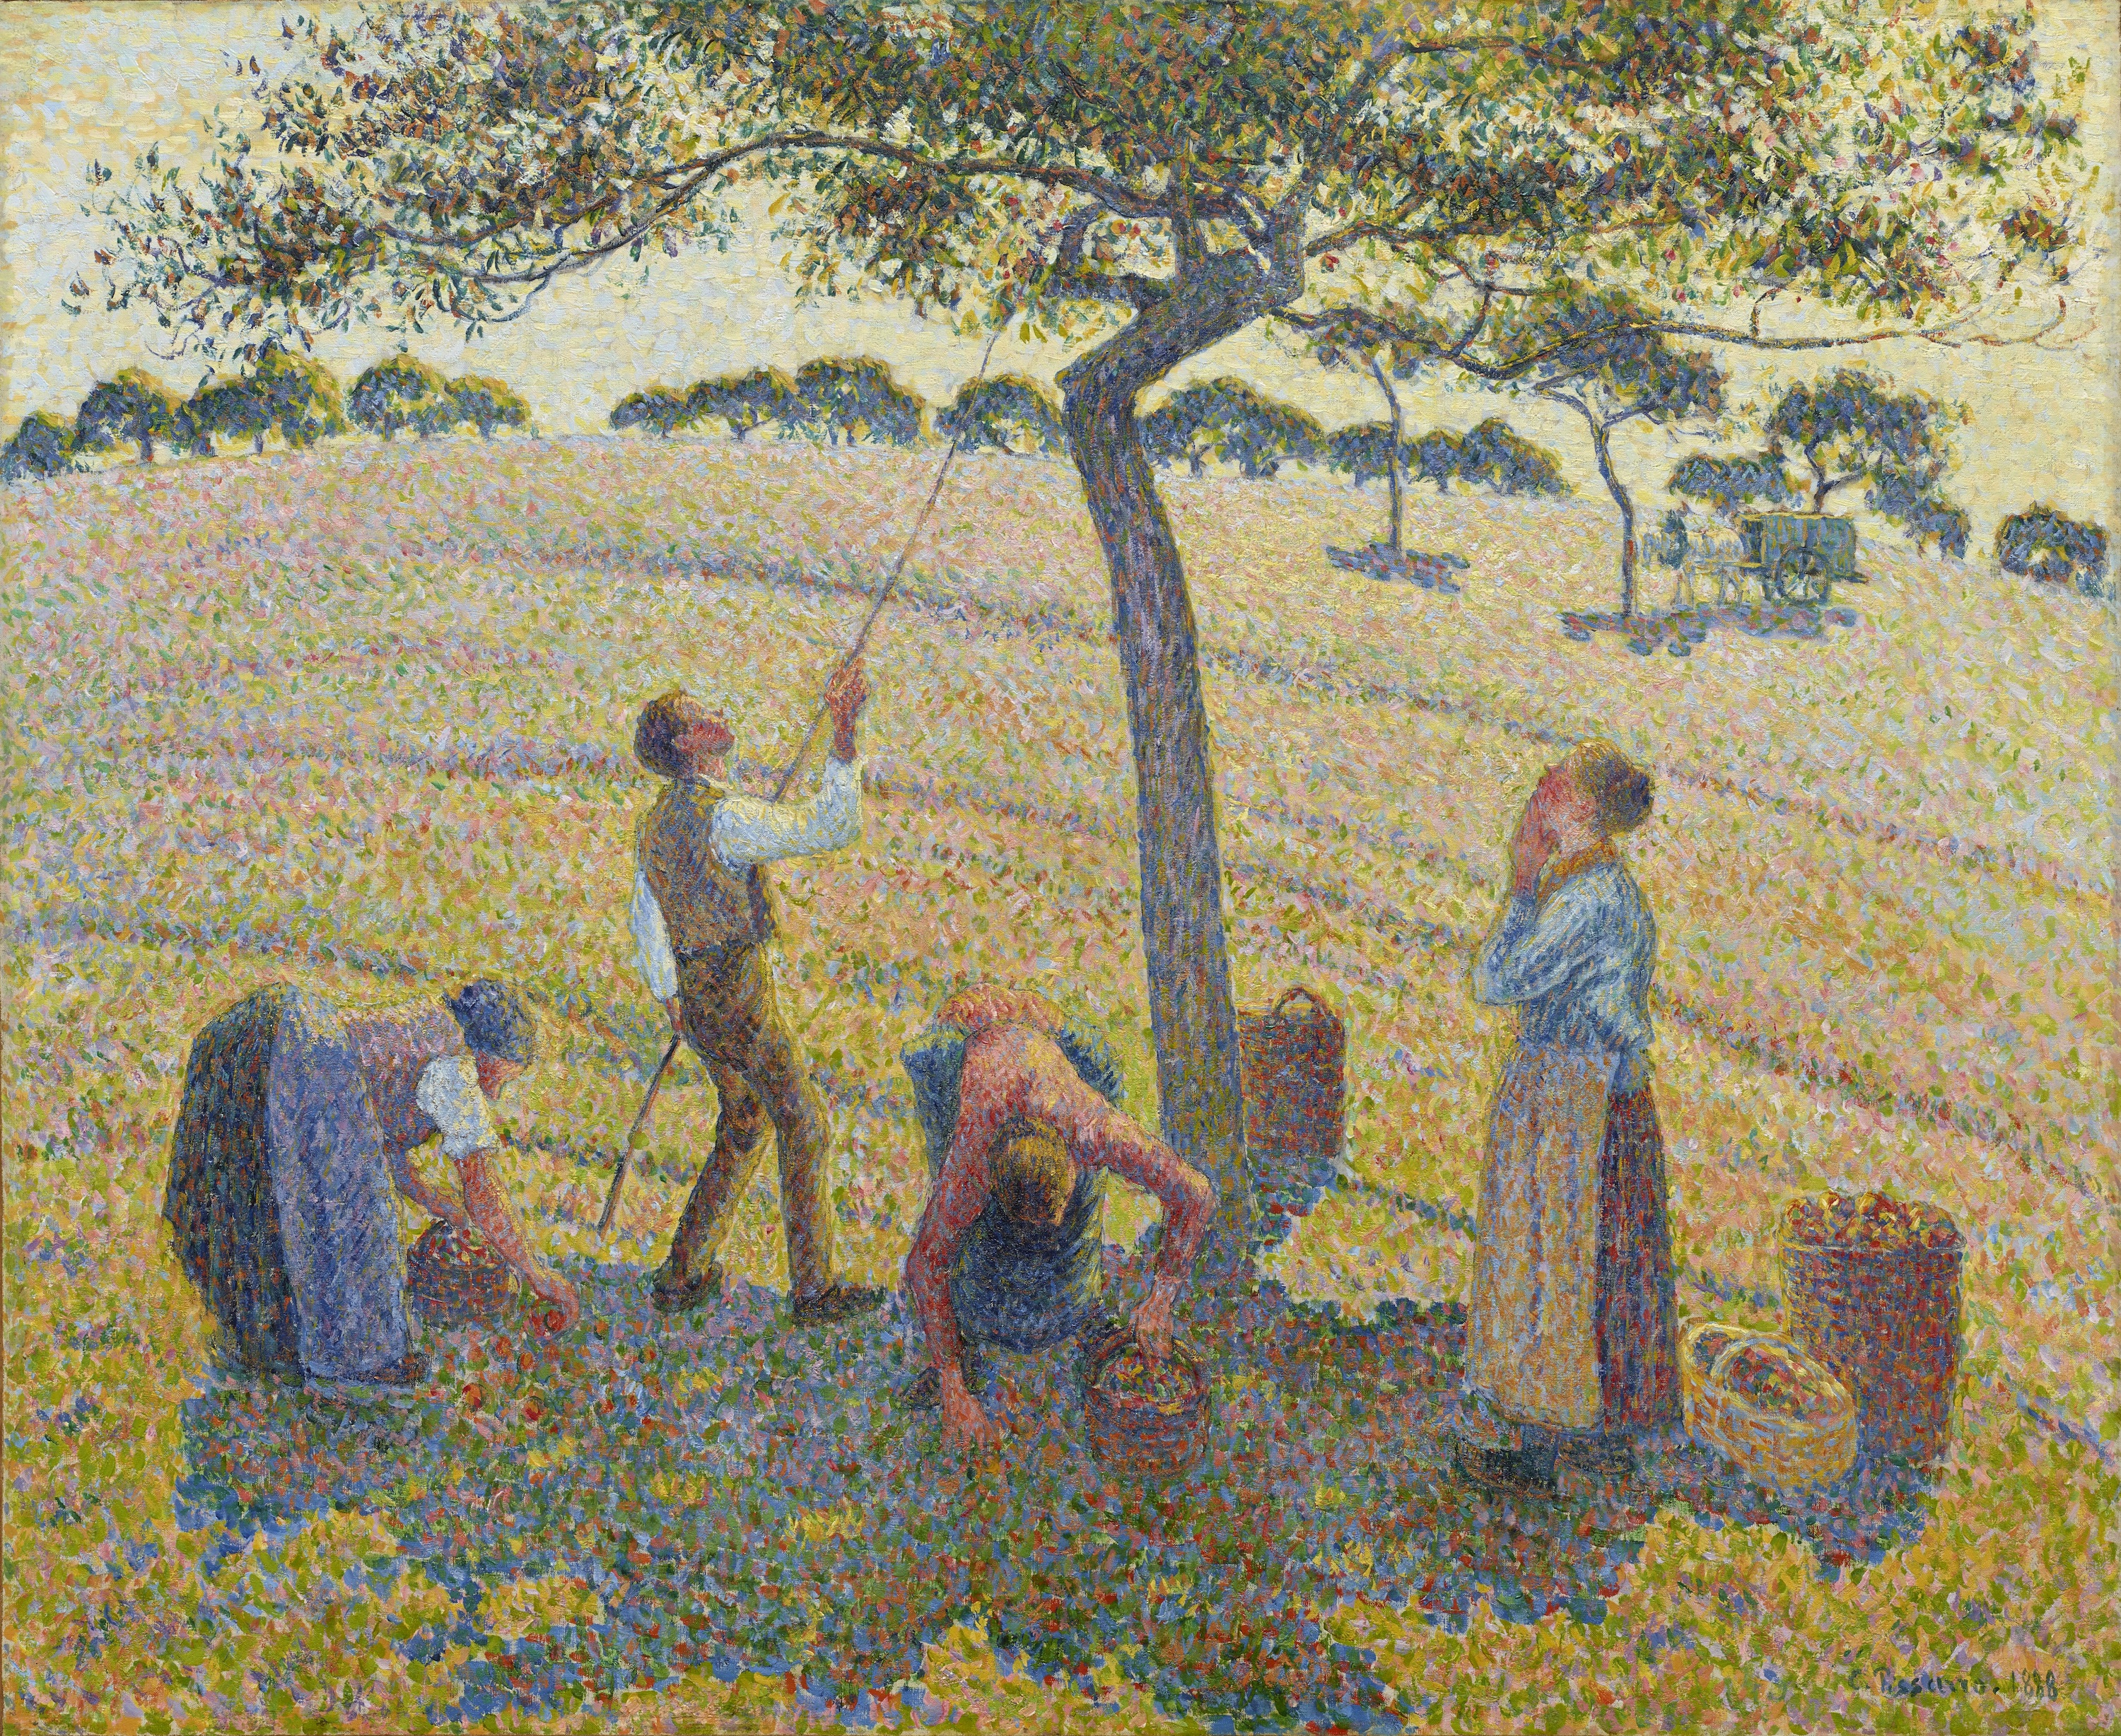 Яблочный урожай by Camille Pissarro - 1888 - 61 x 74 cm 